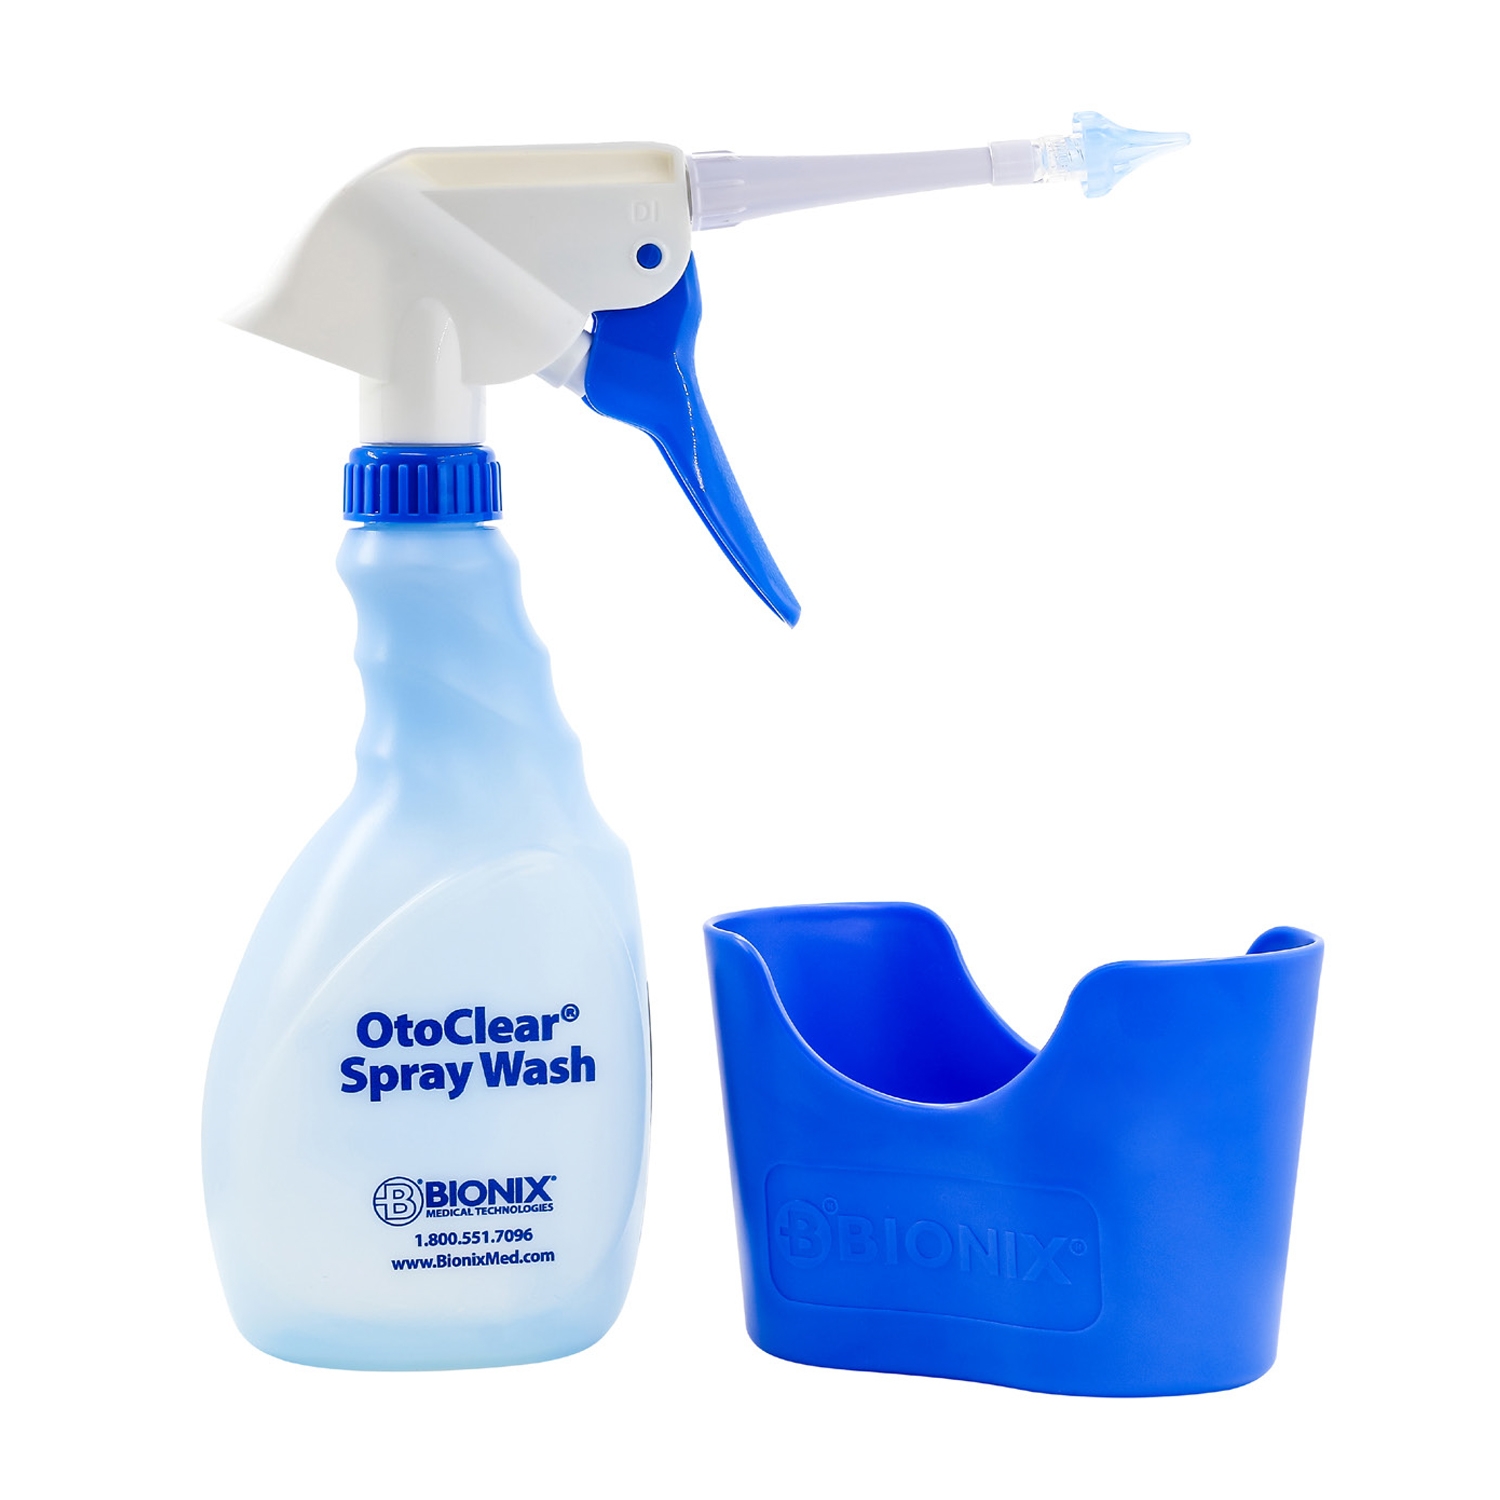 Bionix Otoclear spraywash kit